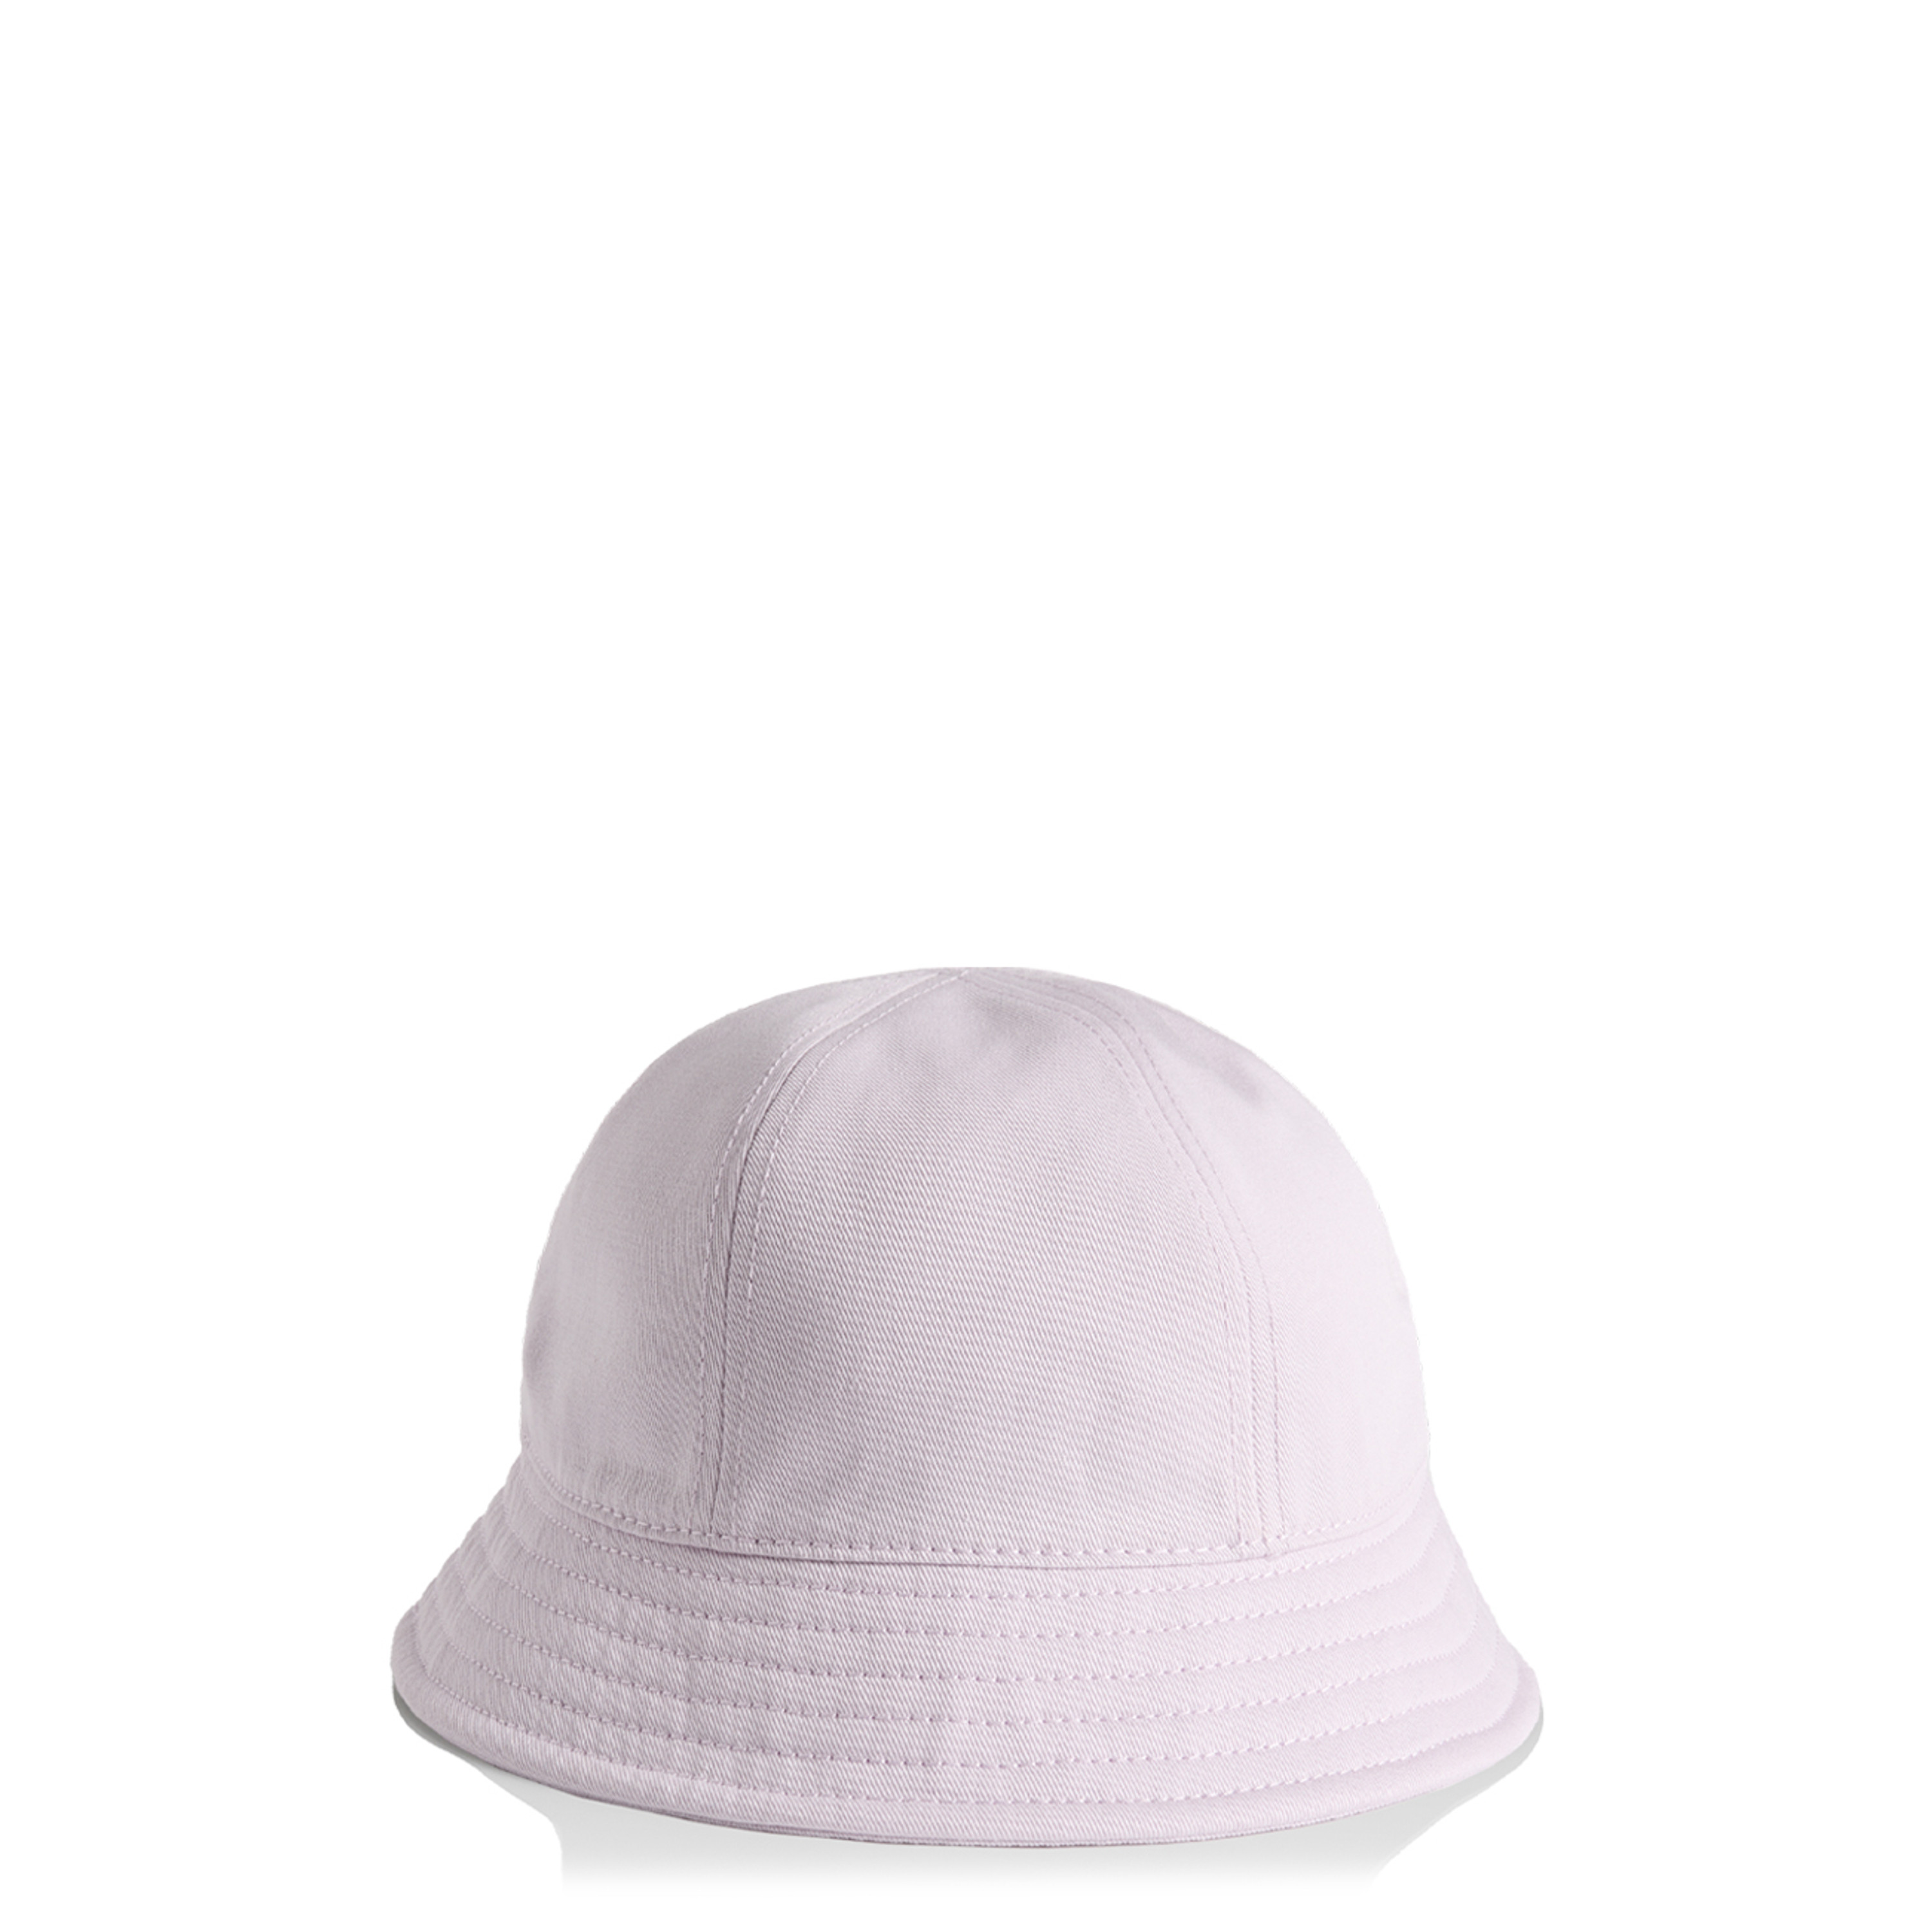 Wo's Brim Bucket Hat - 1179